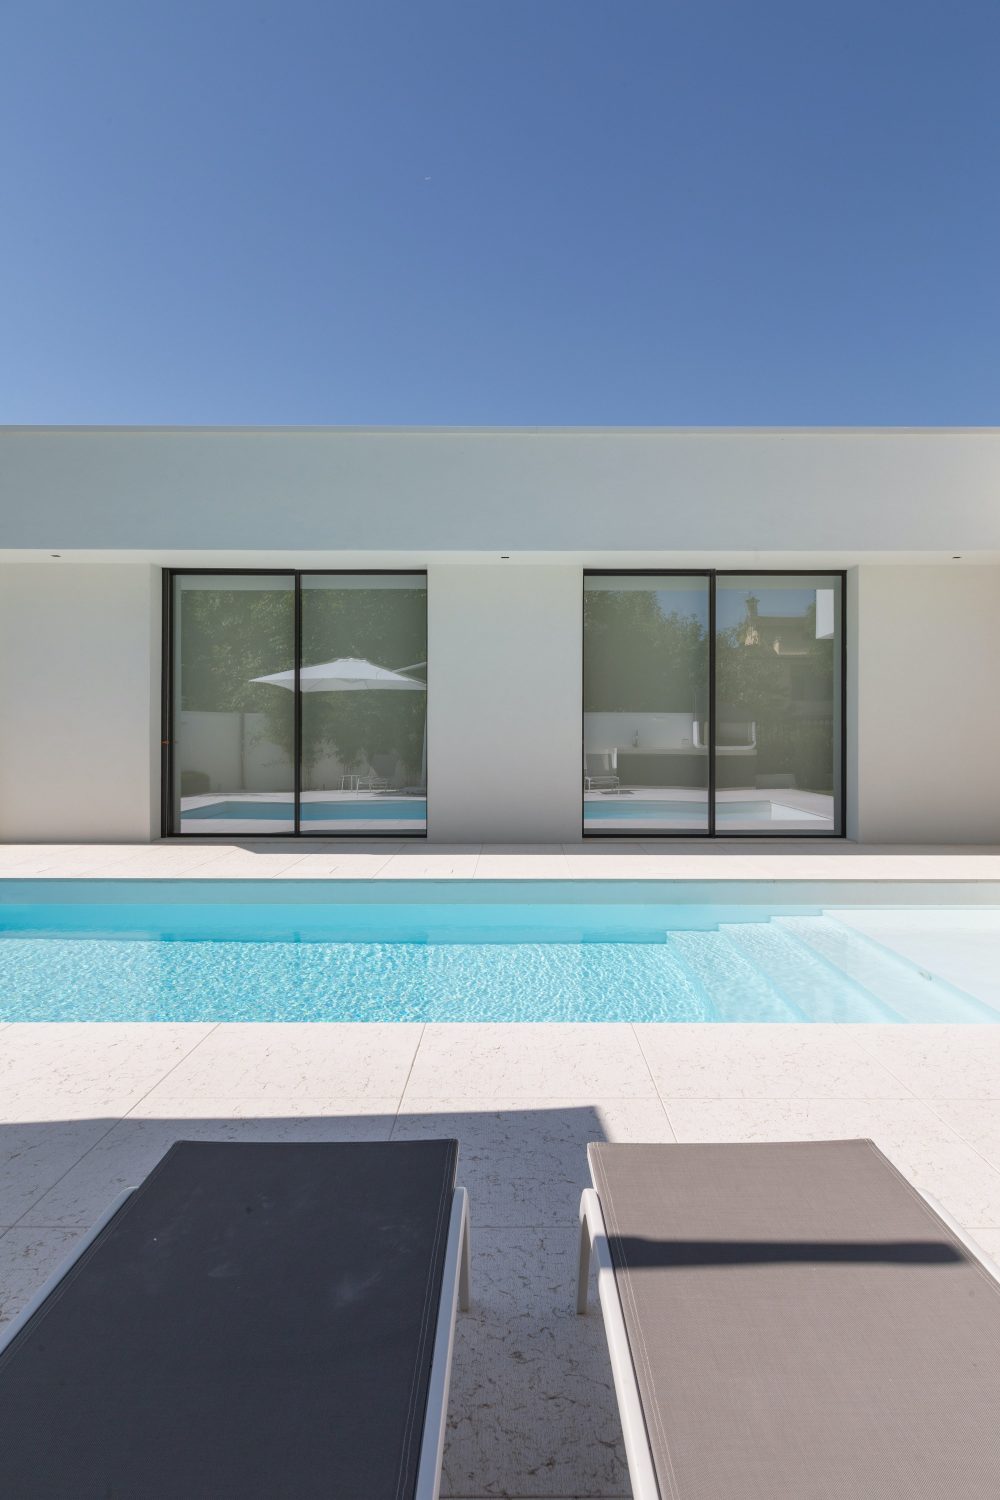 Casa Ora by ZDA | Zupelli Design Architettura